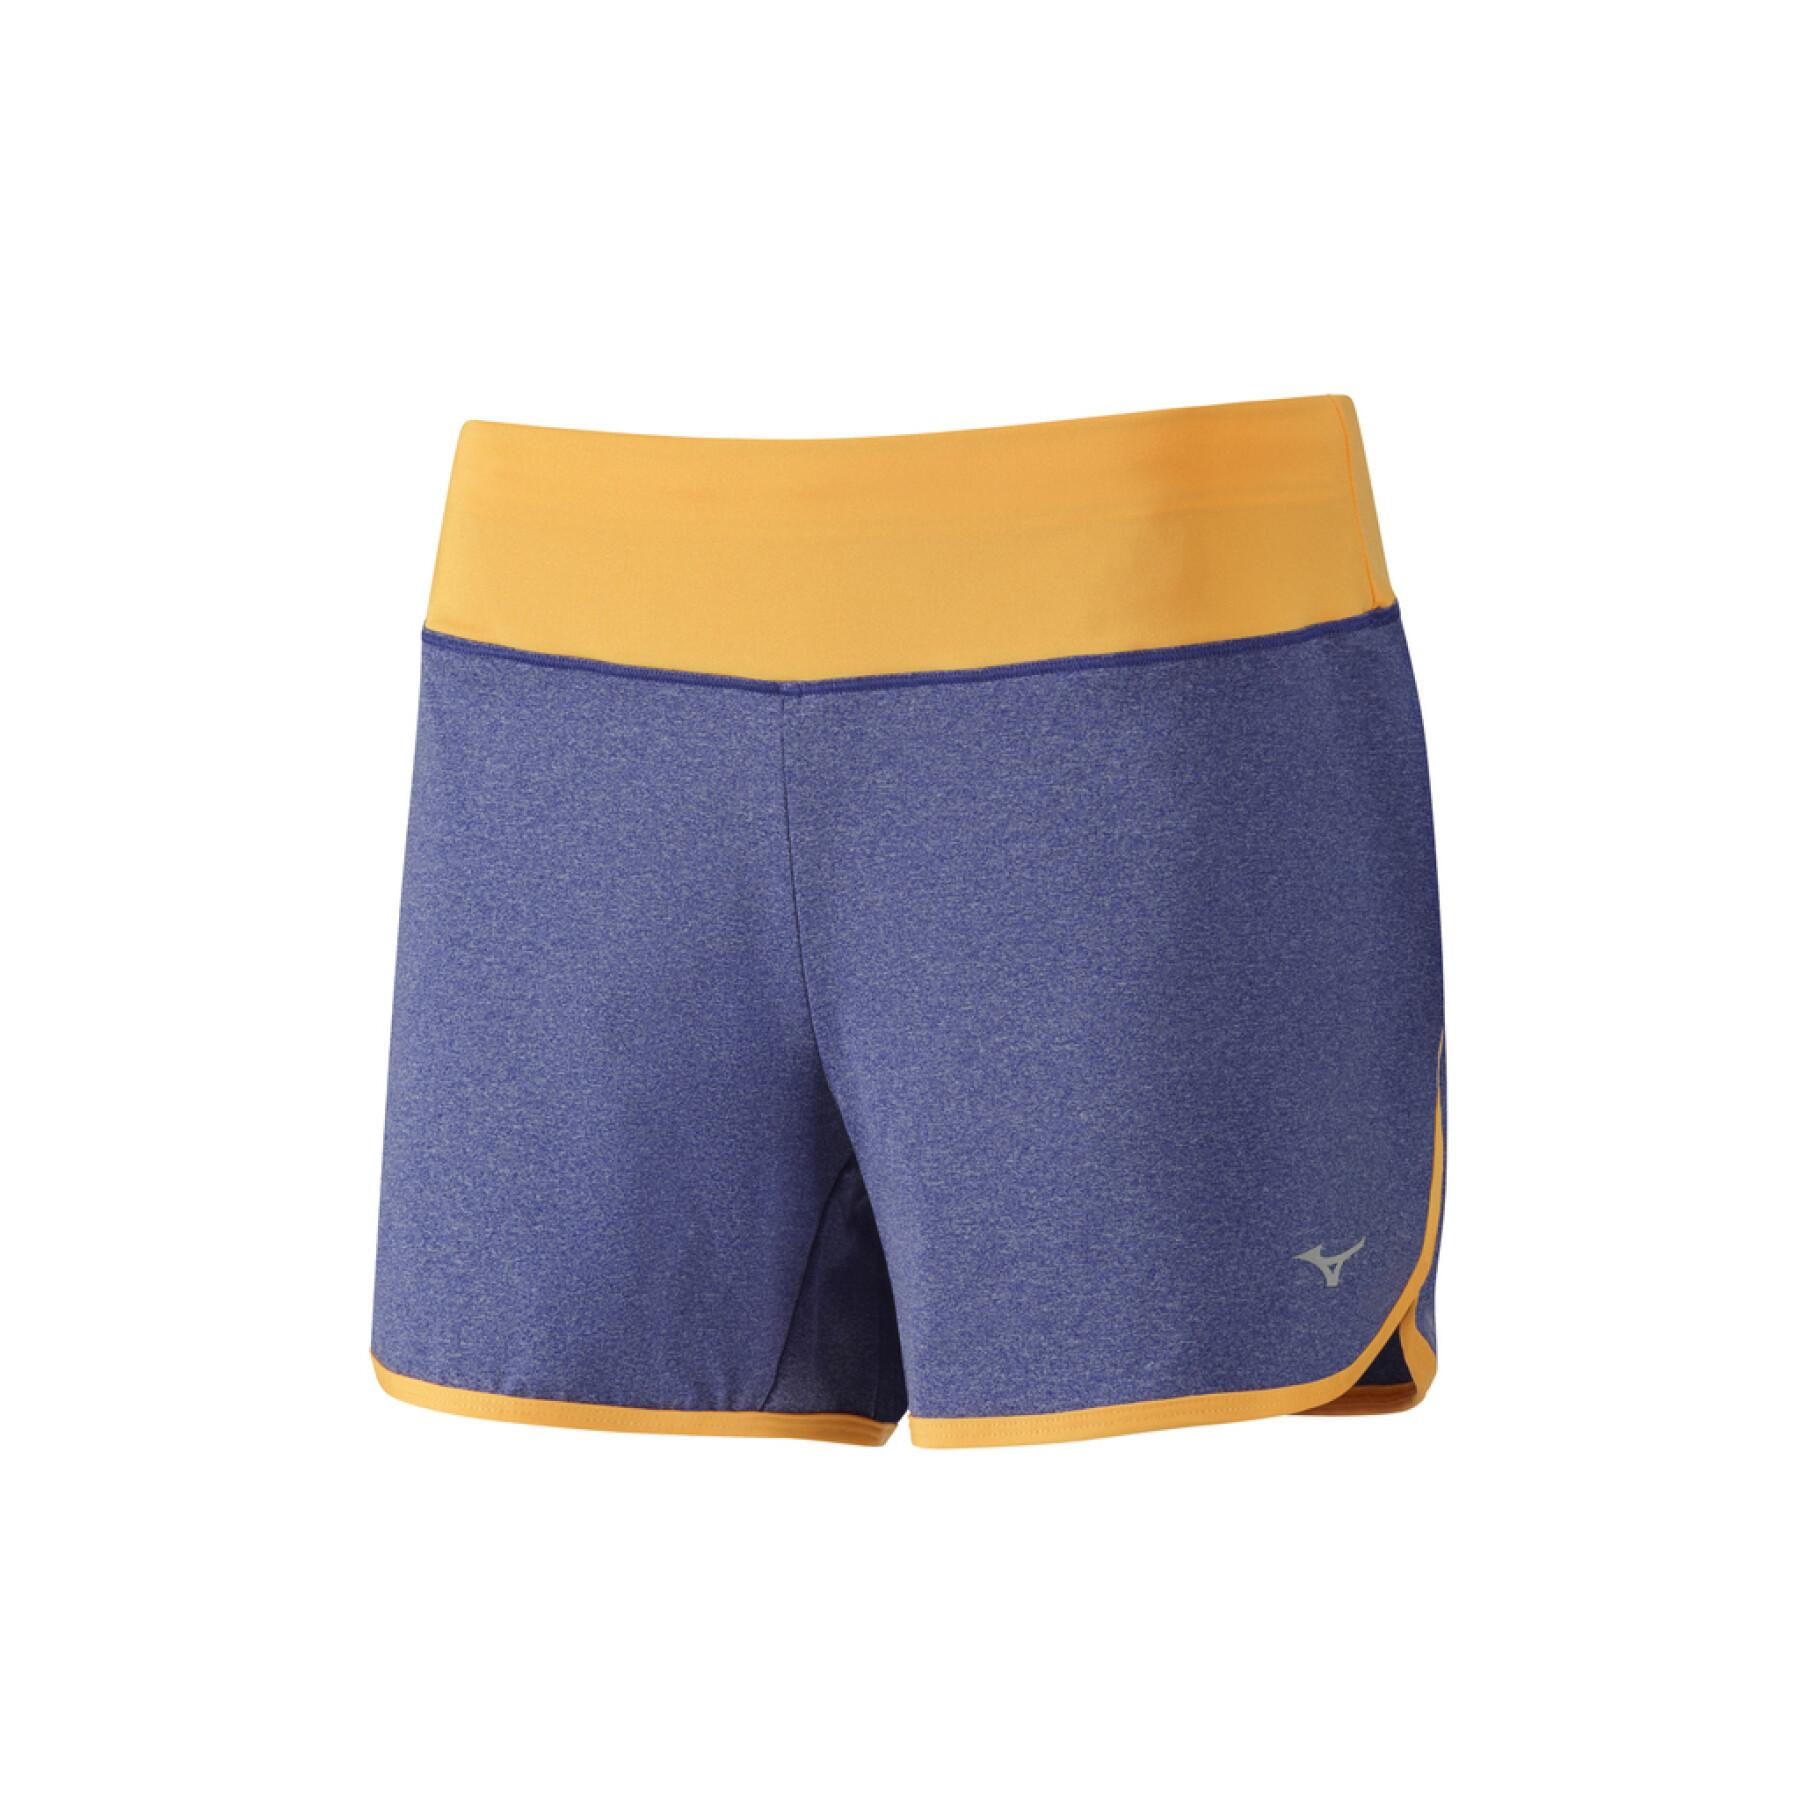 Pantalones cortos Joma Elite IX - Baselayers - Ropa mujer - Ropa